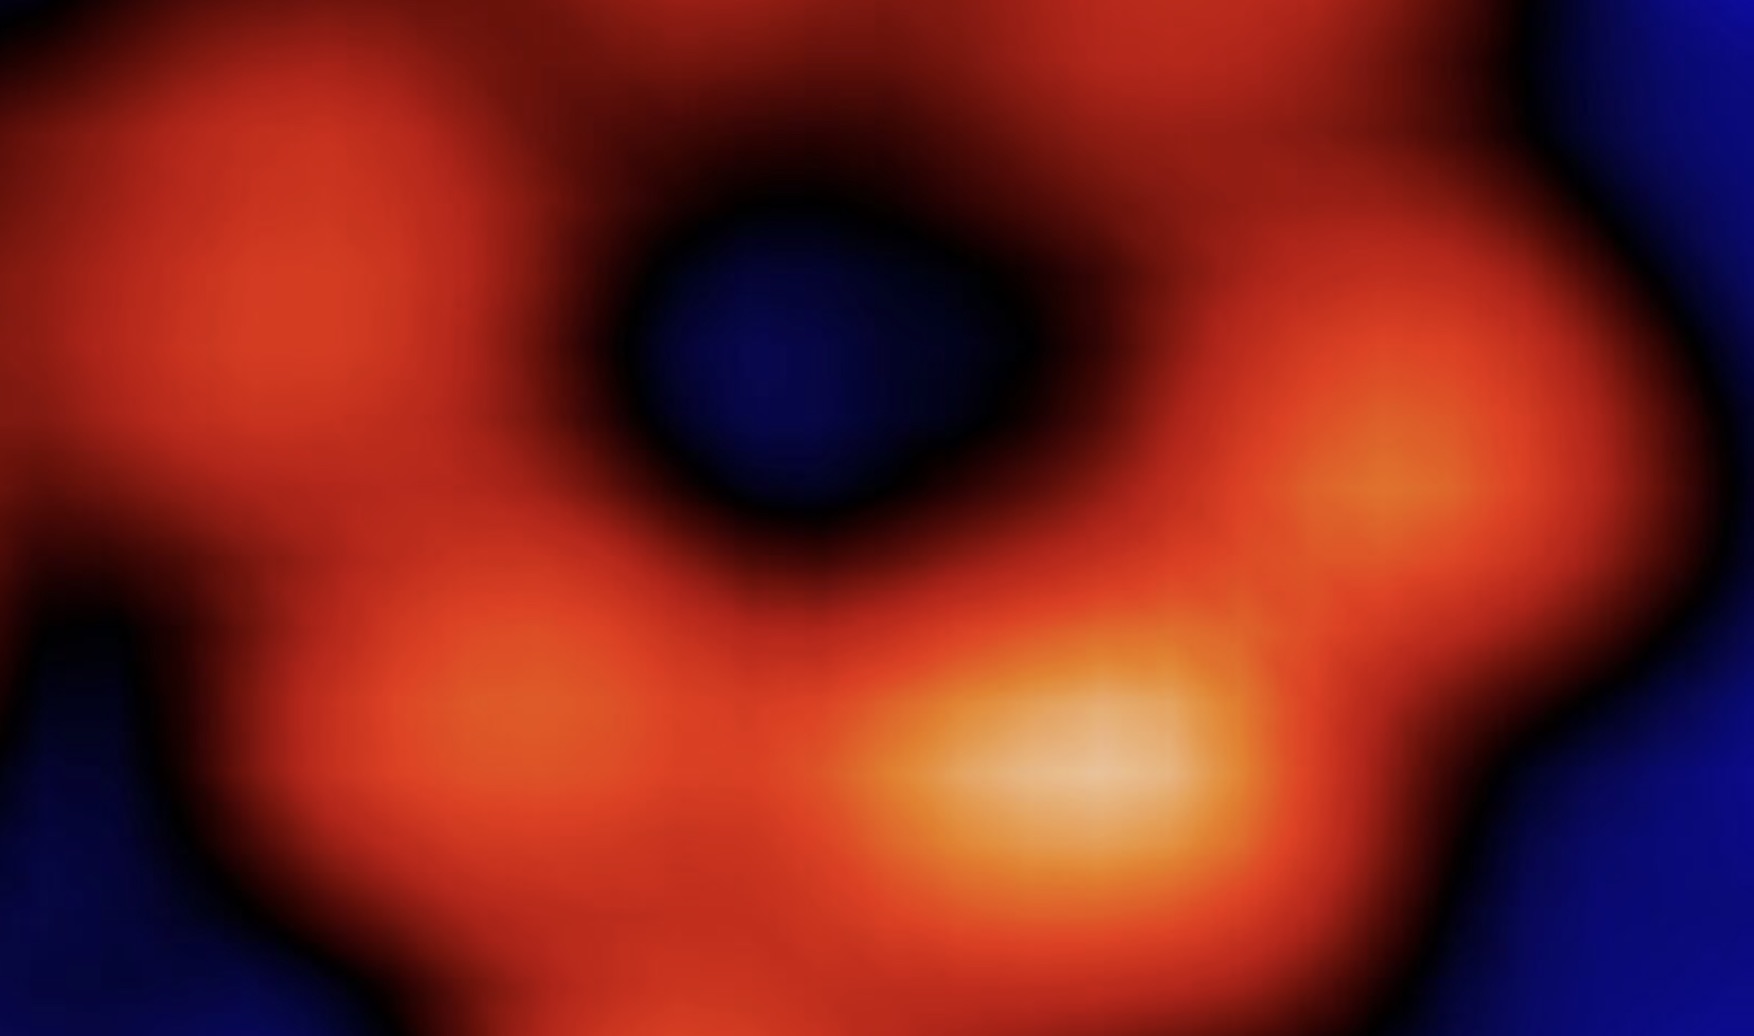 X-ray Image of a Single Atom